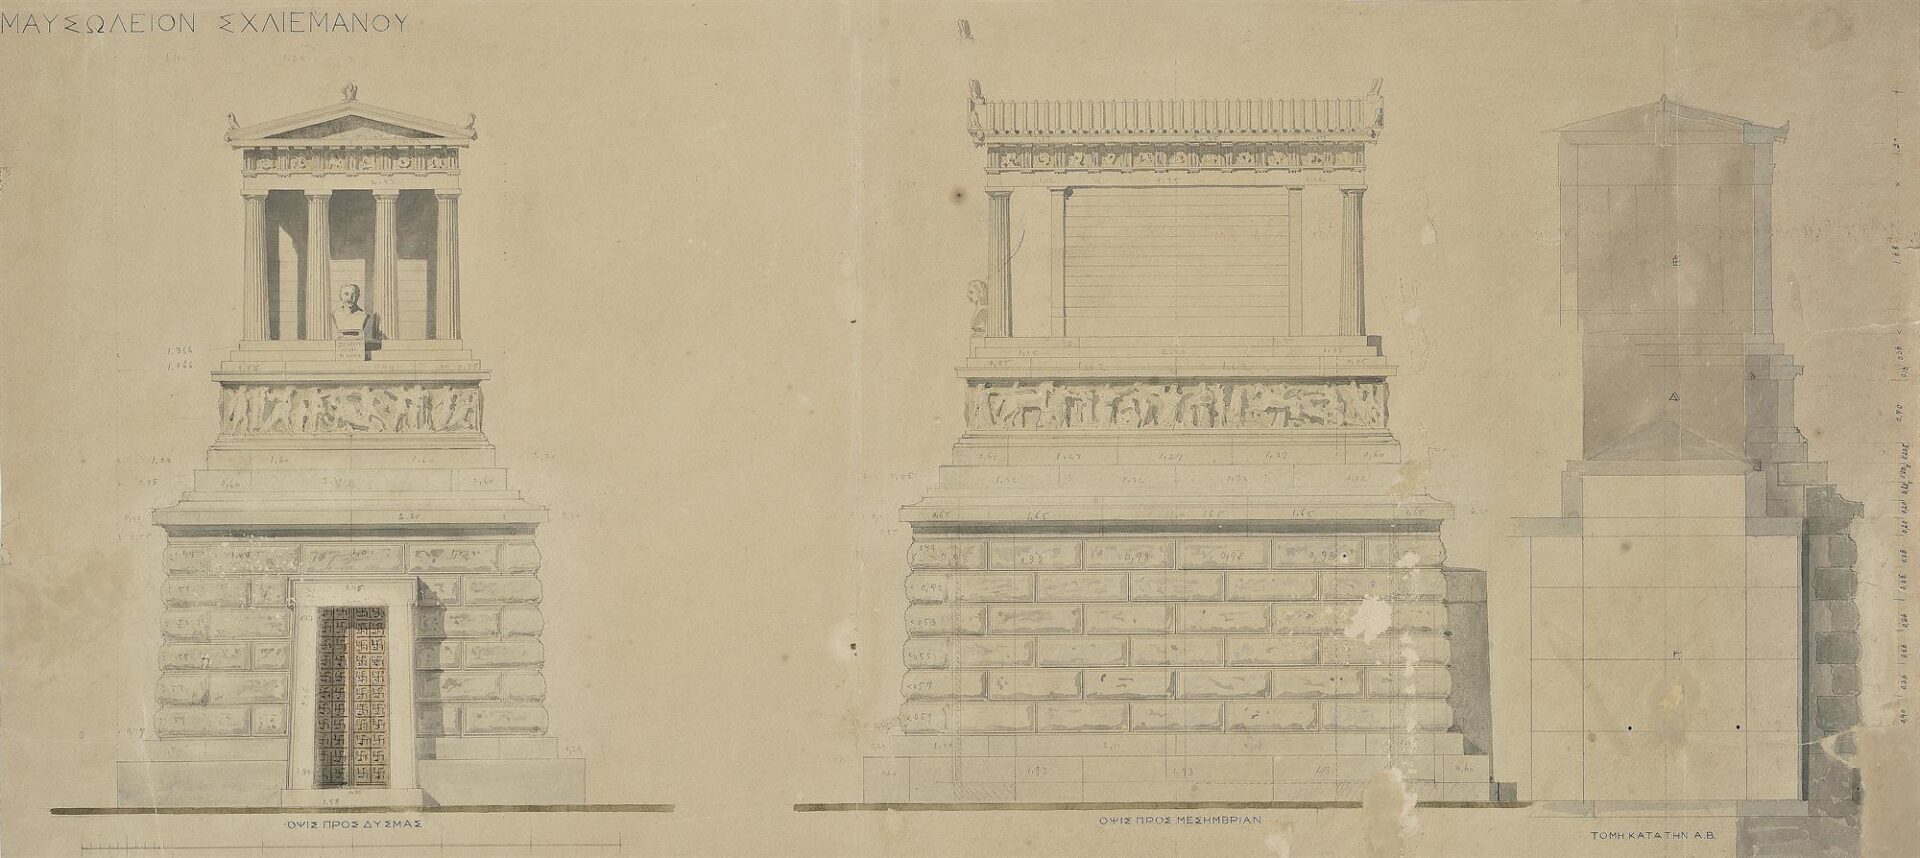 Mausoleum of Heinrich Schliemann, 1st Cemetery, Athens. Views and Sections - Ziller Ernst